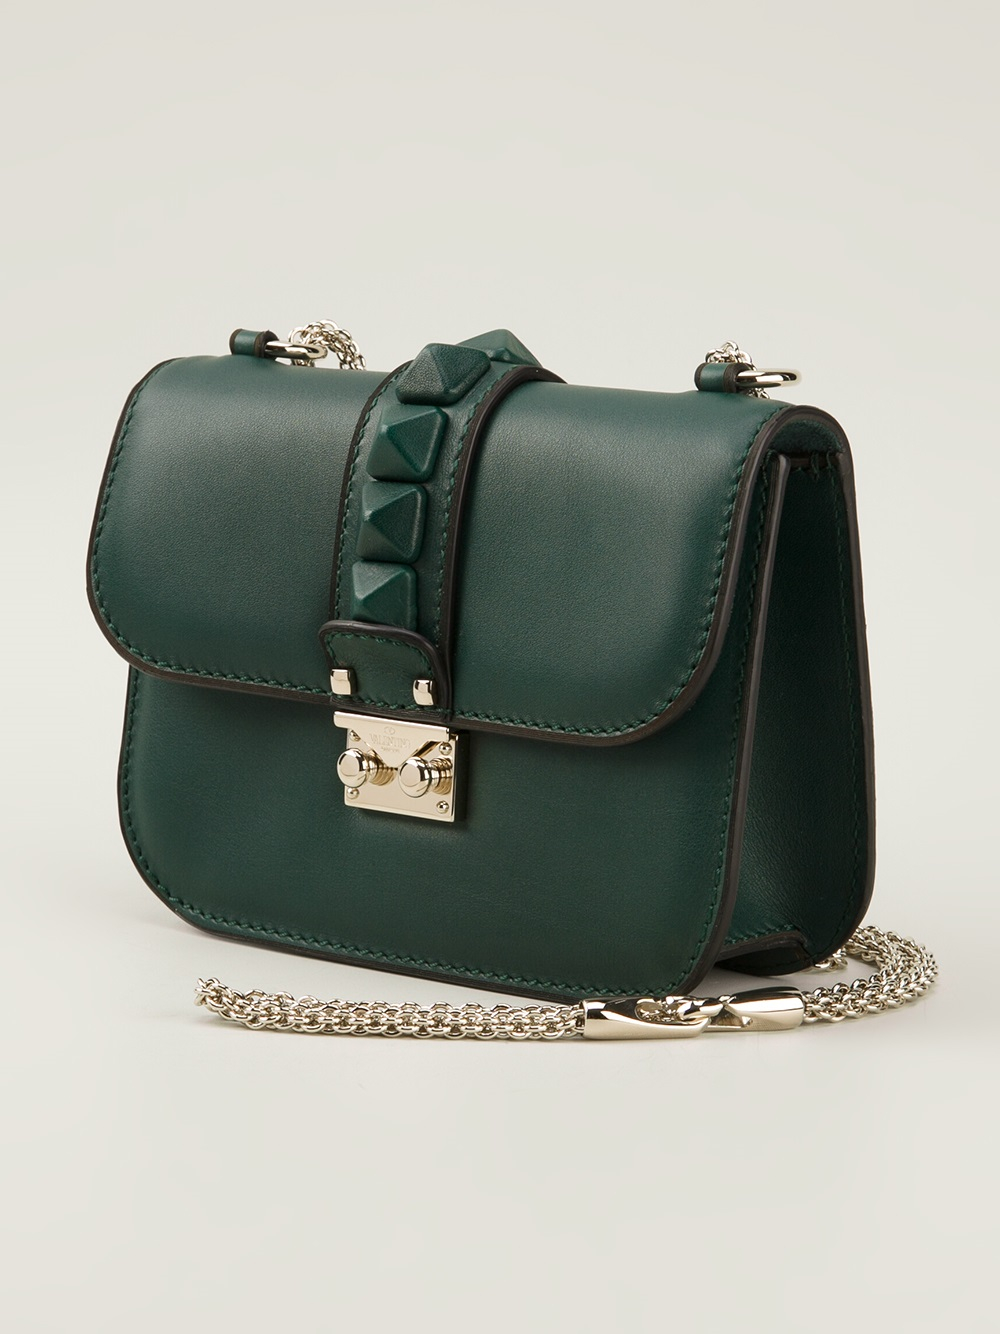 Lyst - Valentino Glam Lock Shoulder Bag in Green